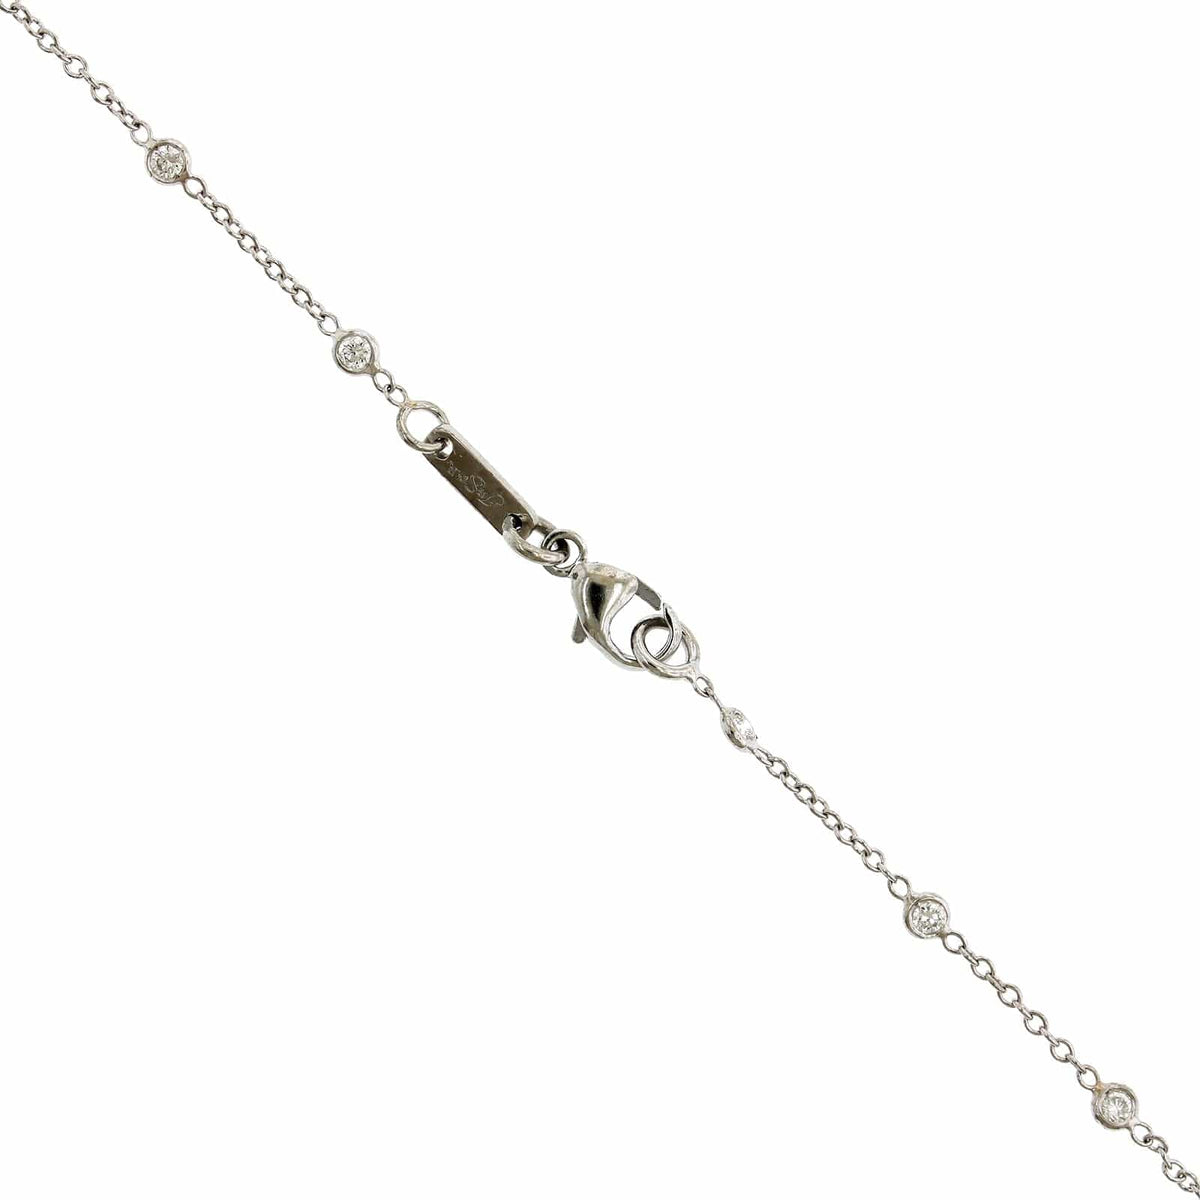 Platinum Pink Sapphire Diamond Halo Necklace